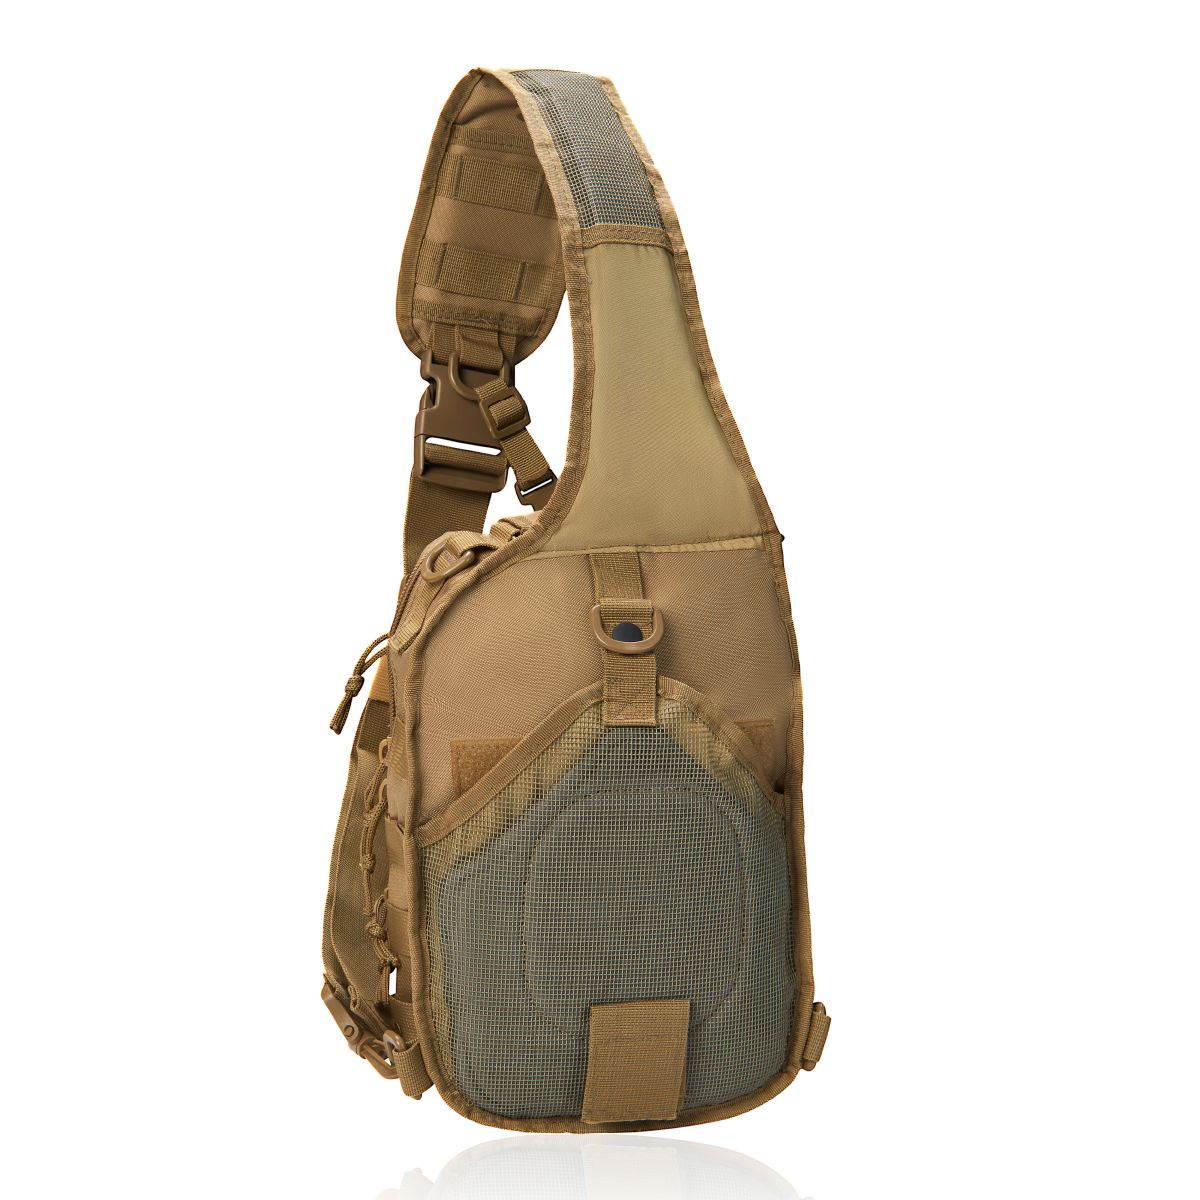 Рюкзак однолямочный Mil-Tec “One strap assault pack”. Койот. 5